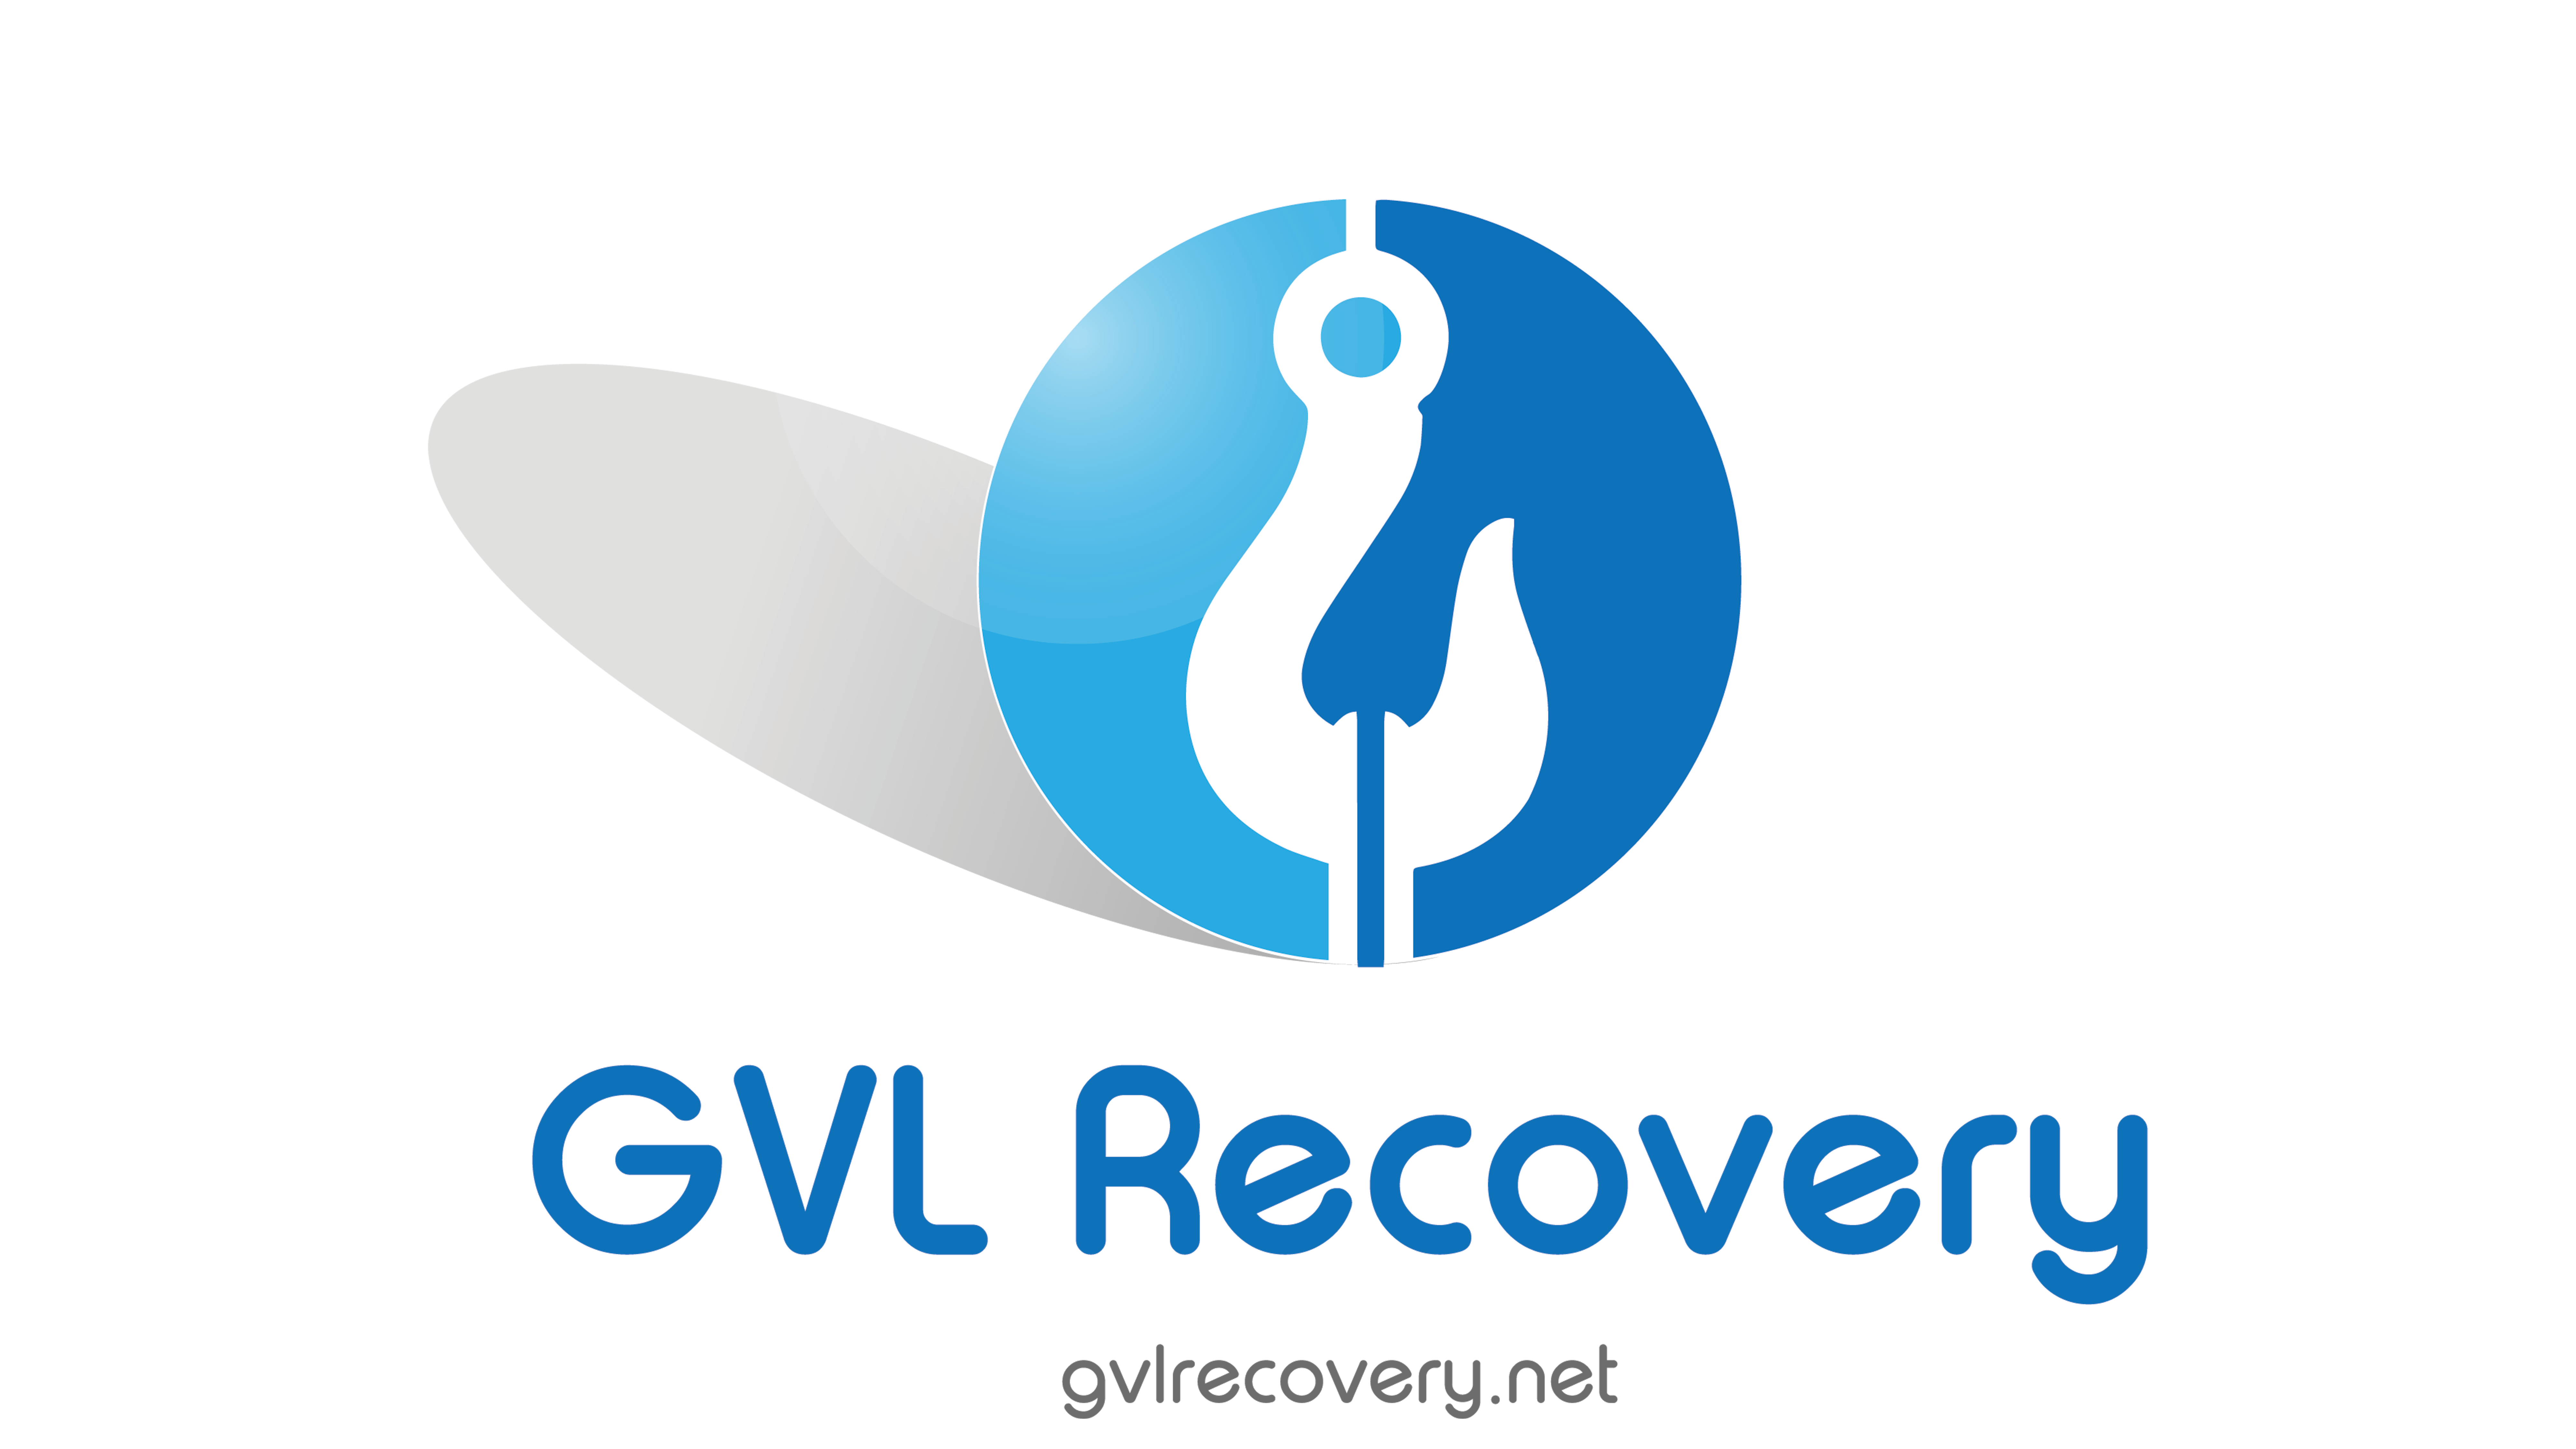 GVL Recovery